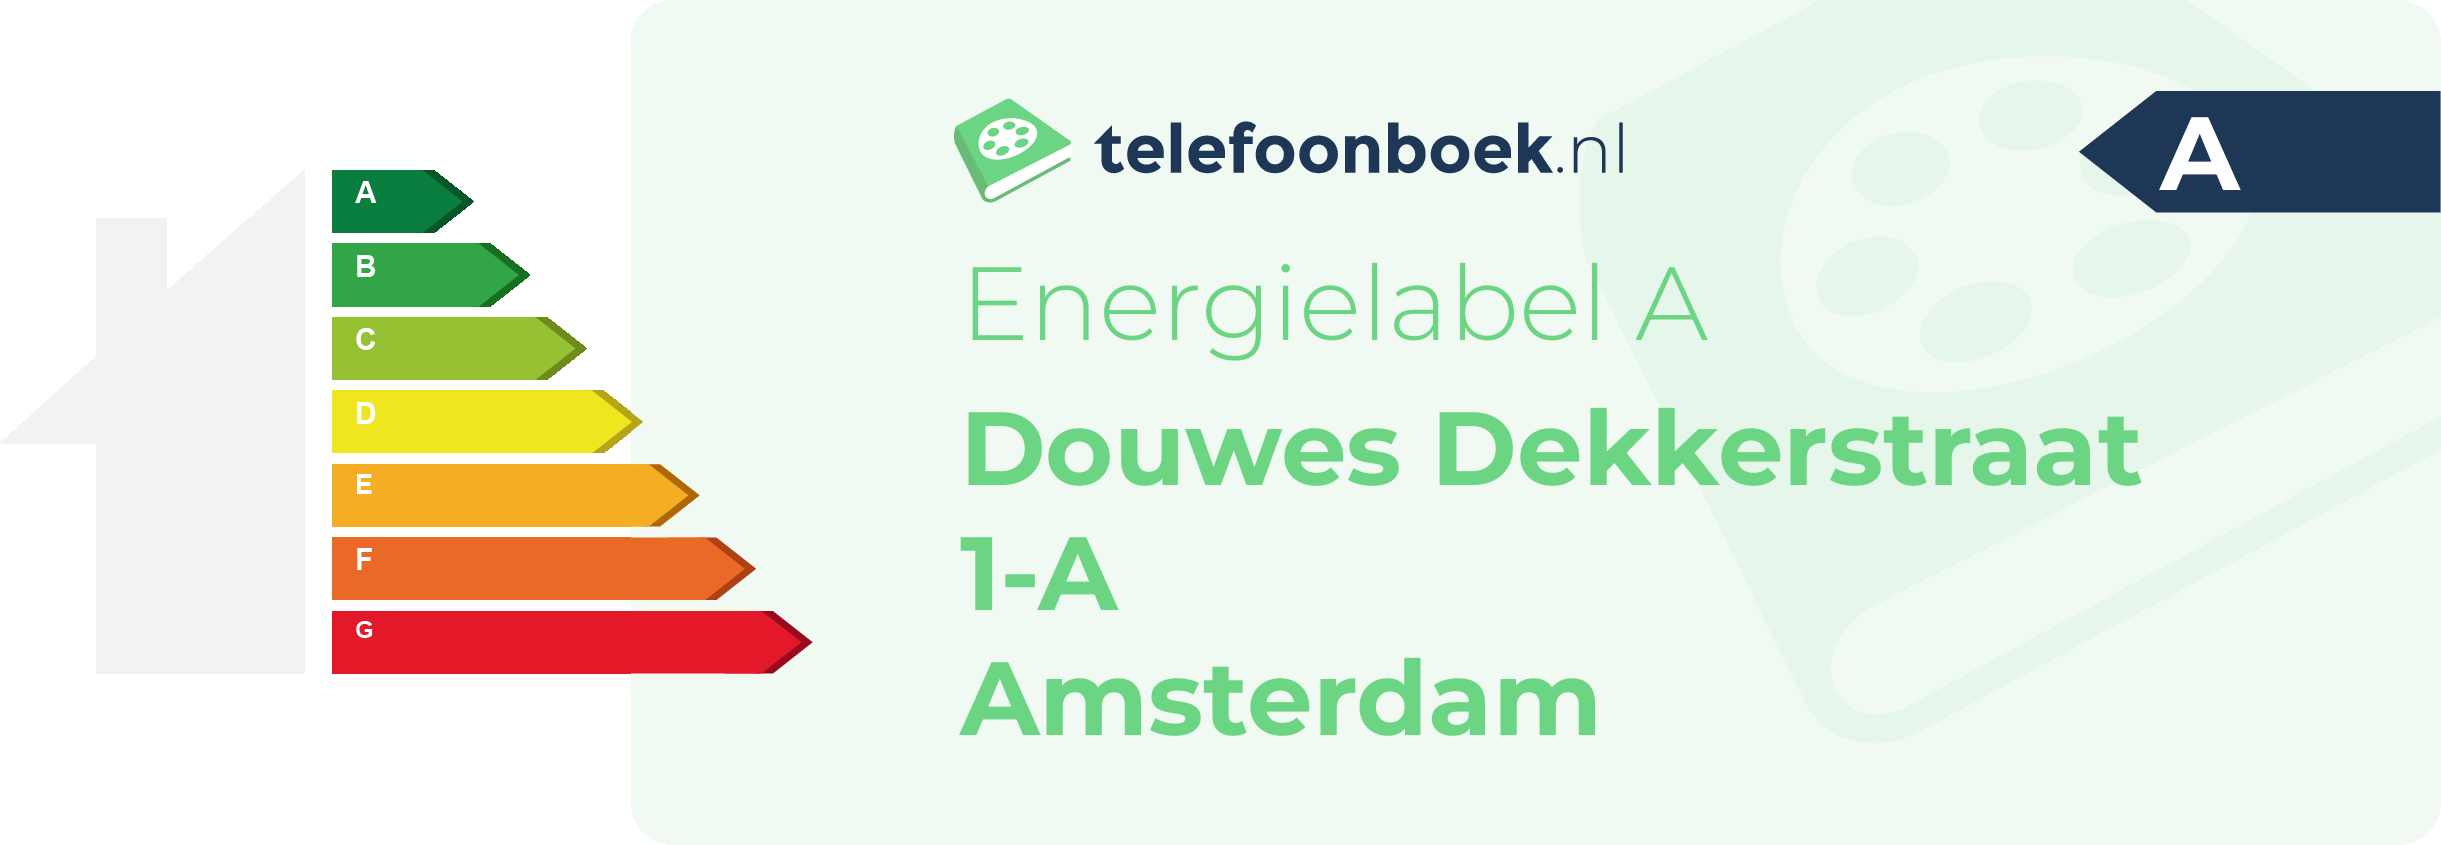 Energielabel Douwes Dekkerstraat 1-A Amsterdam